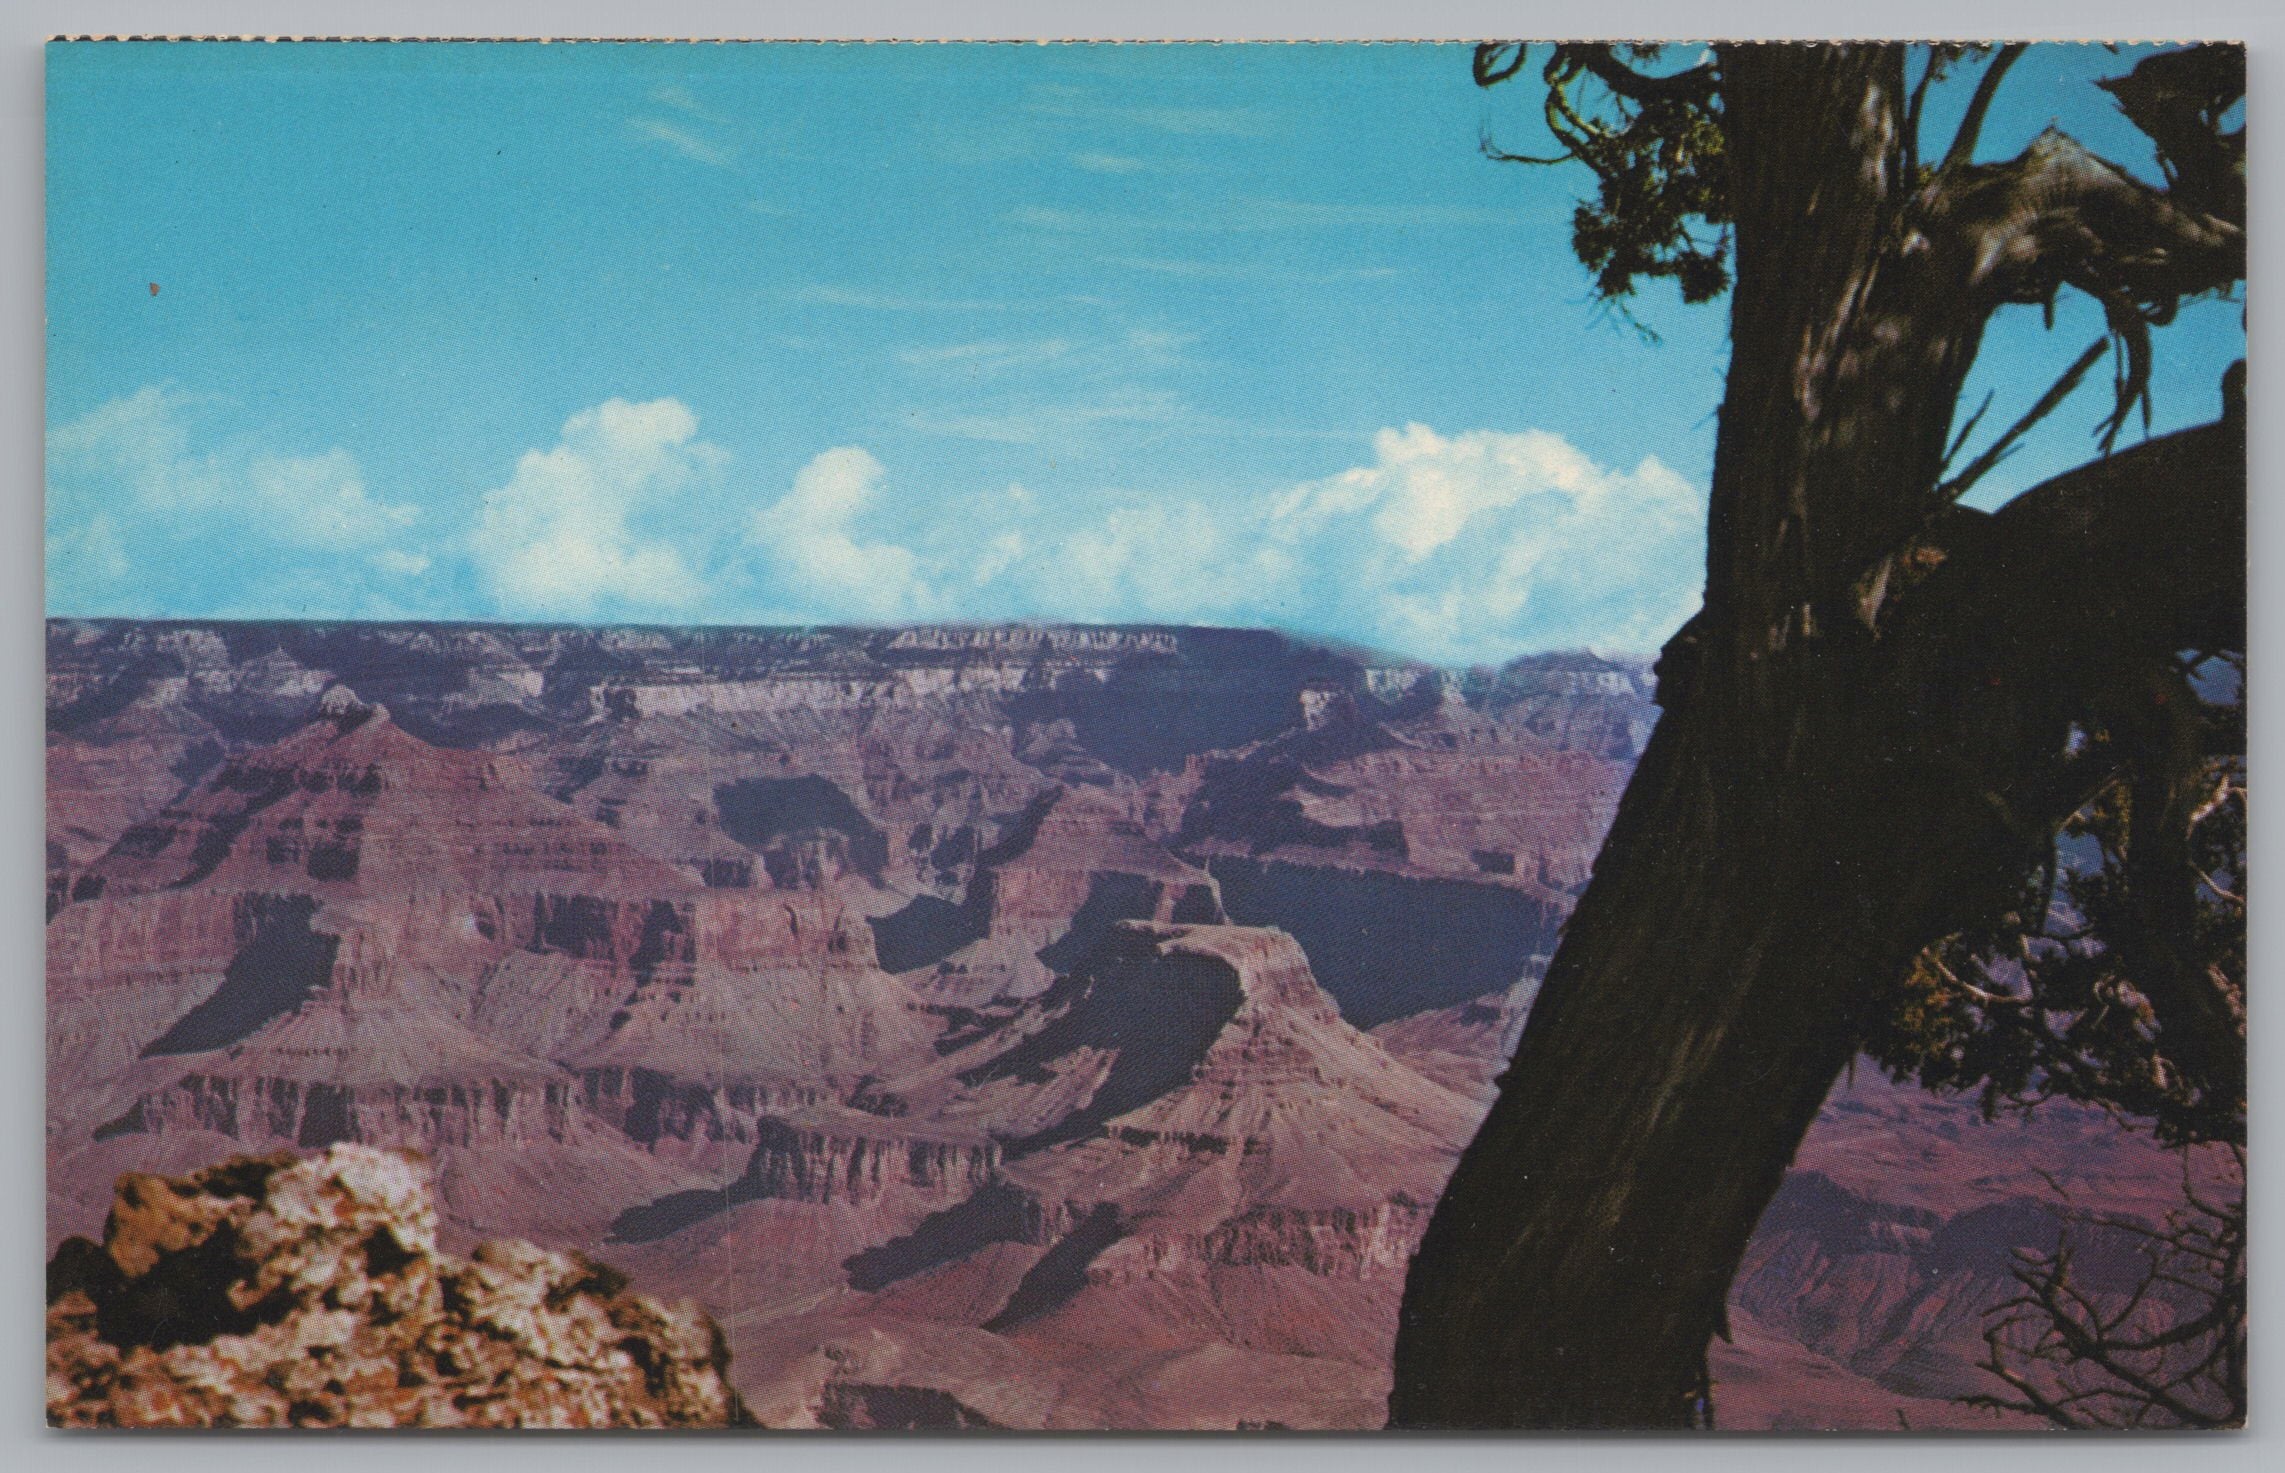 The Grand Canyon National Park, Arizona, USA, Vintage Post Card.